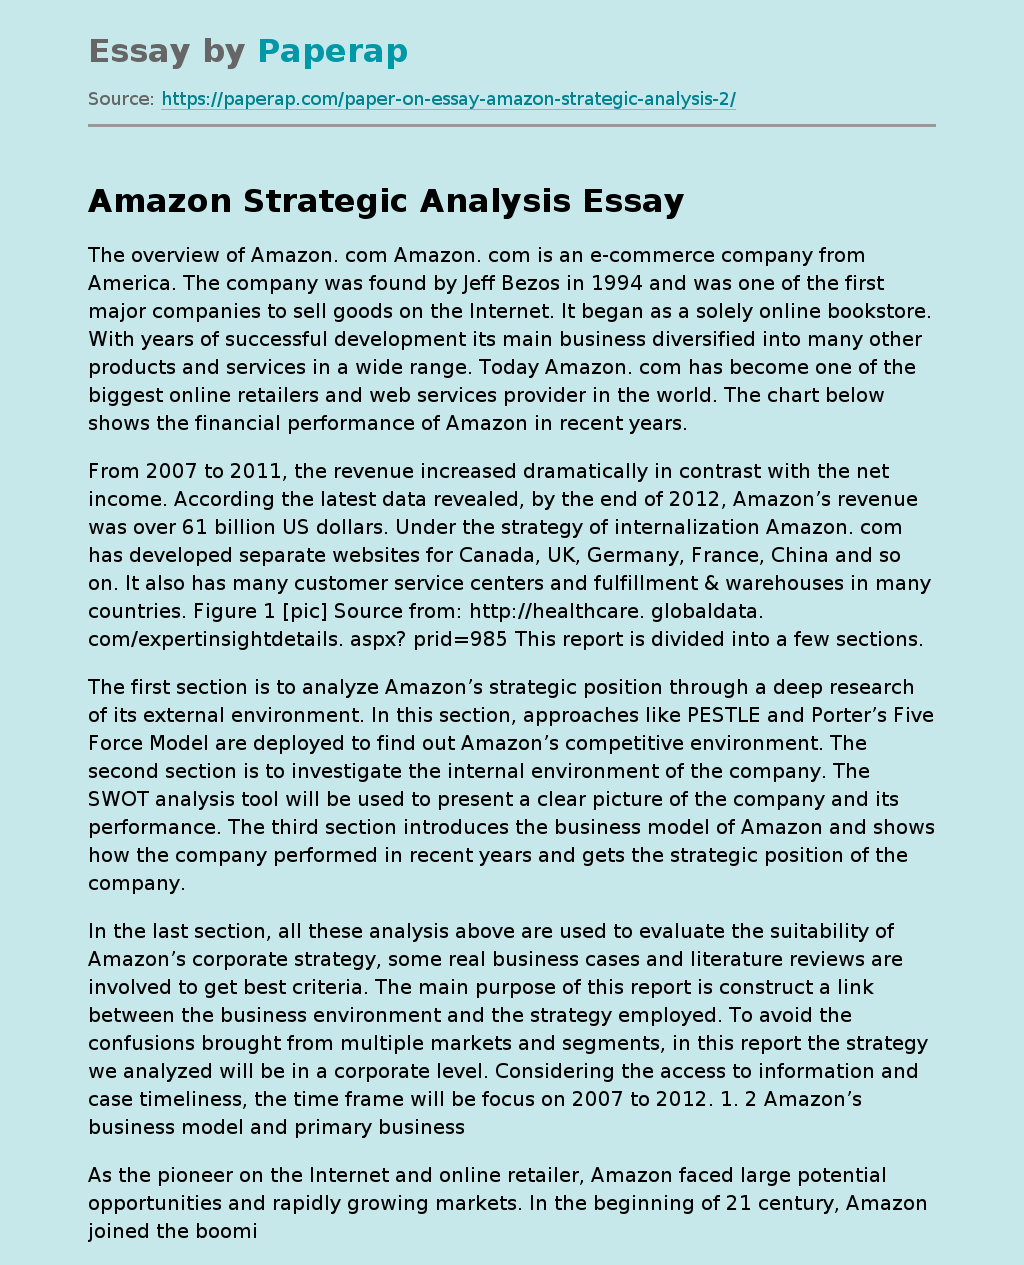 Amazon Strategic Analysis